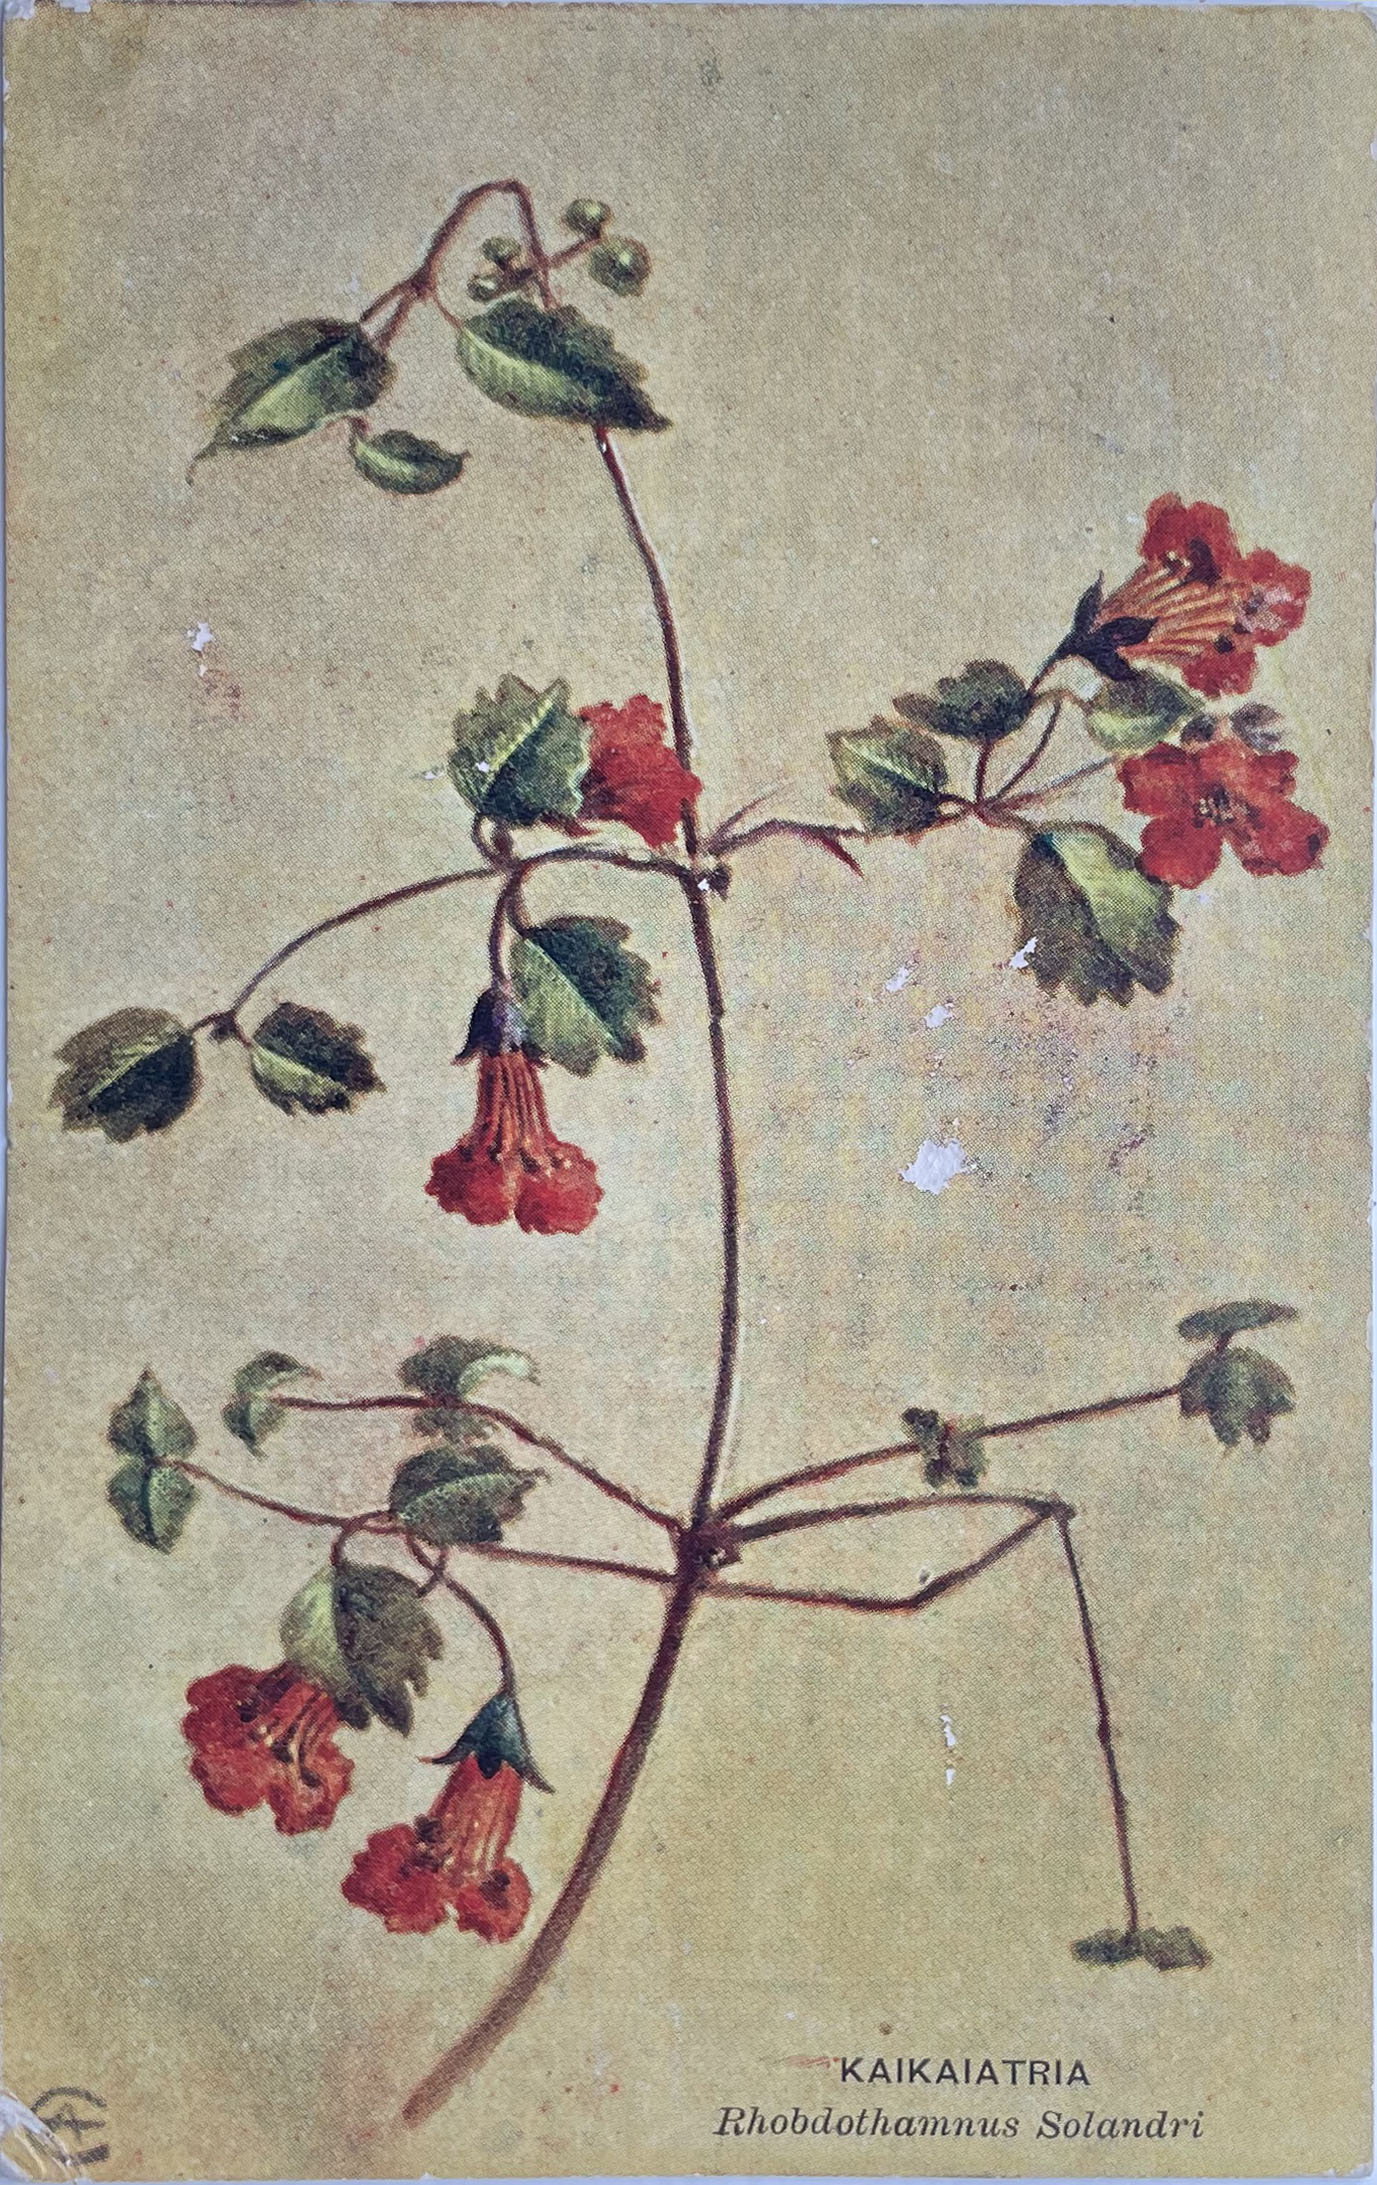 Atkinson postcard, KAIKAIATRIA, Rhobdothamnus Solandri, -- LINK to larger image